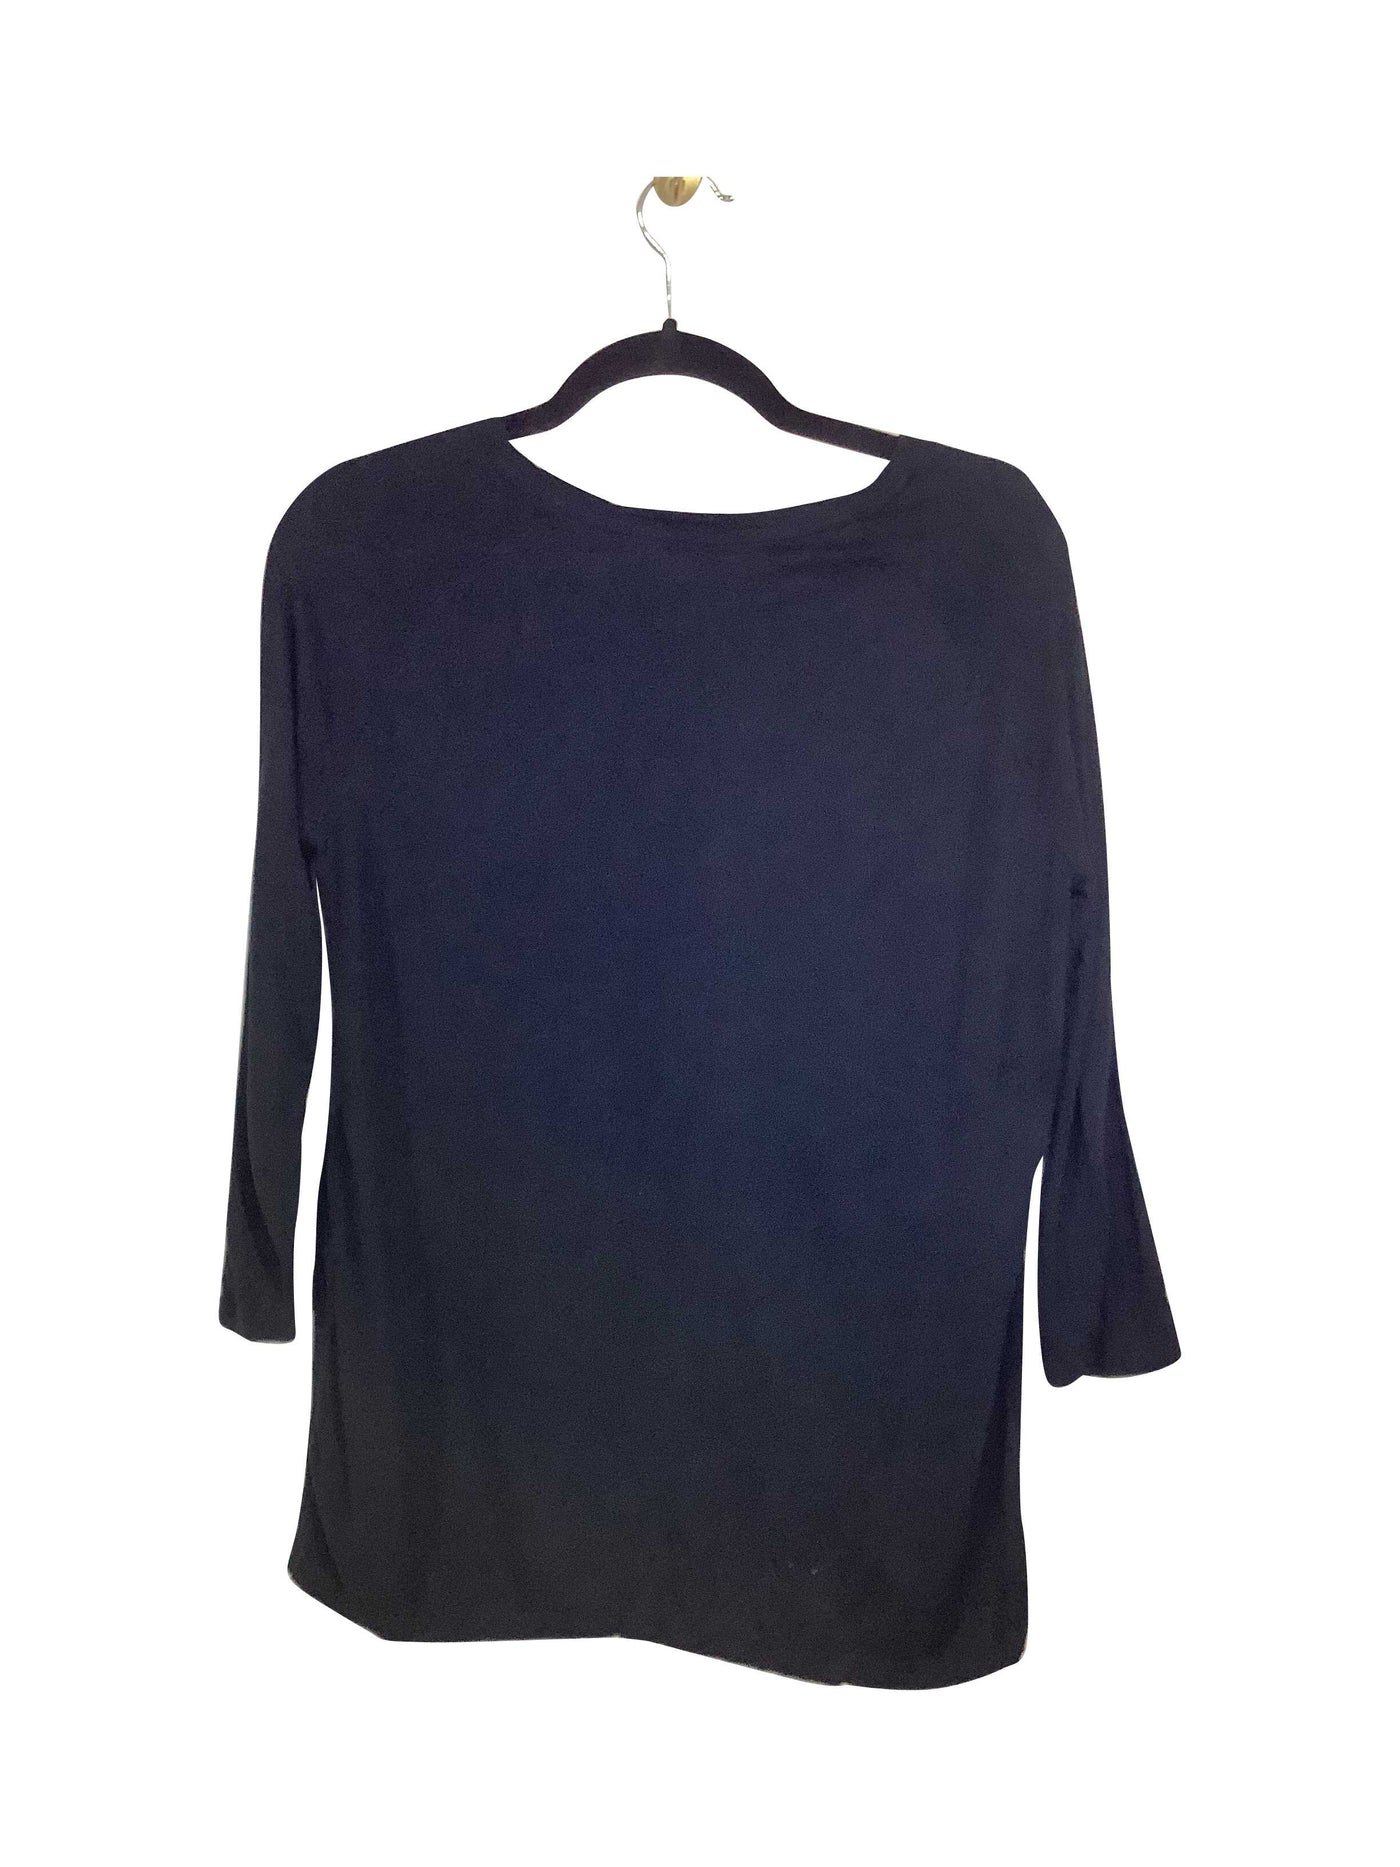 DYNAMITE Regular fit T-shirt in Black - Size XS | 13.95 $ KOOP